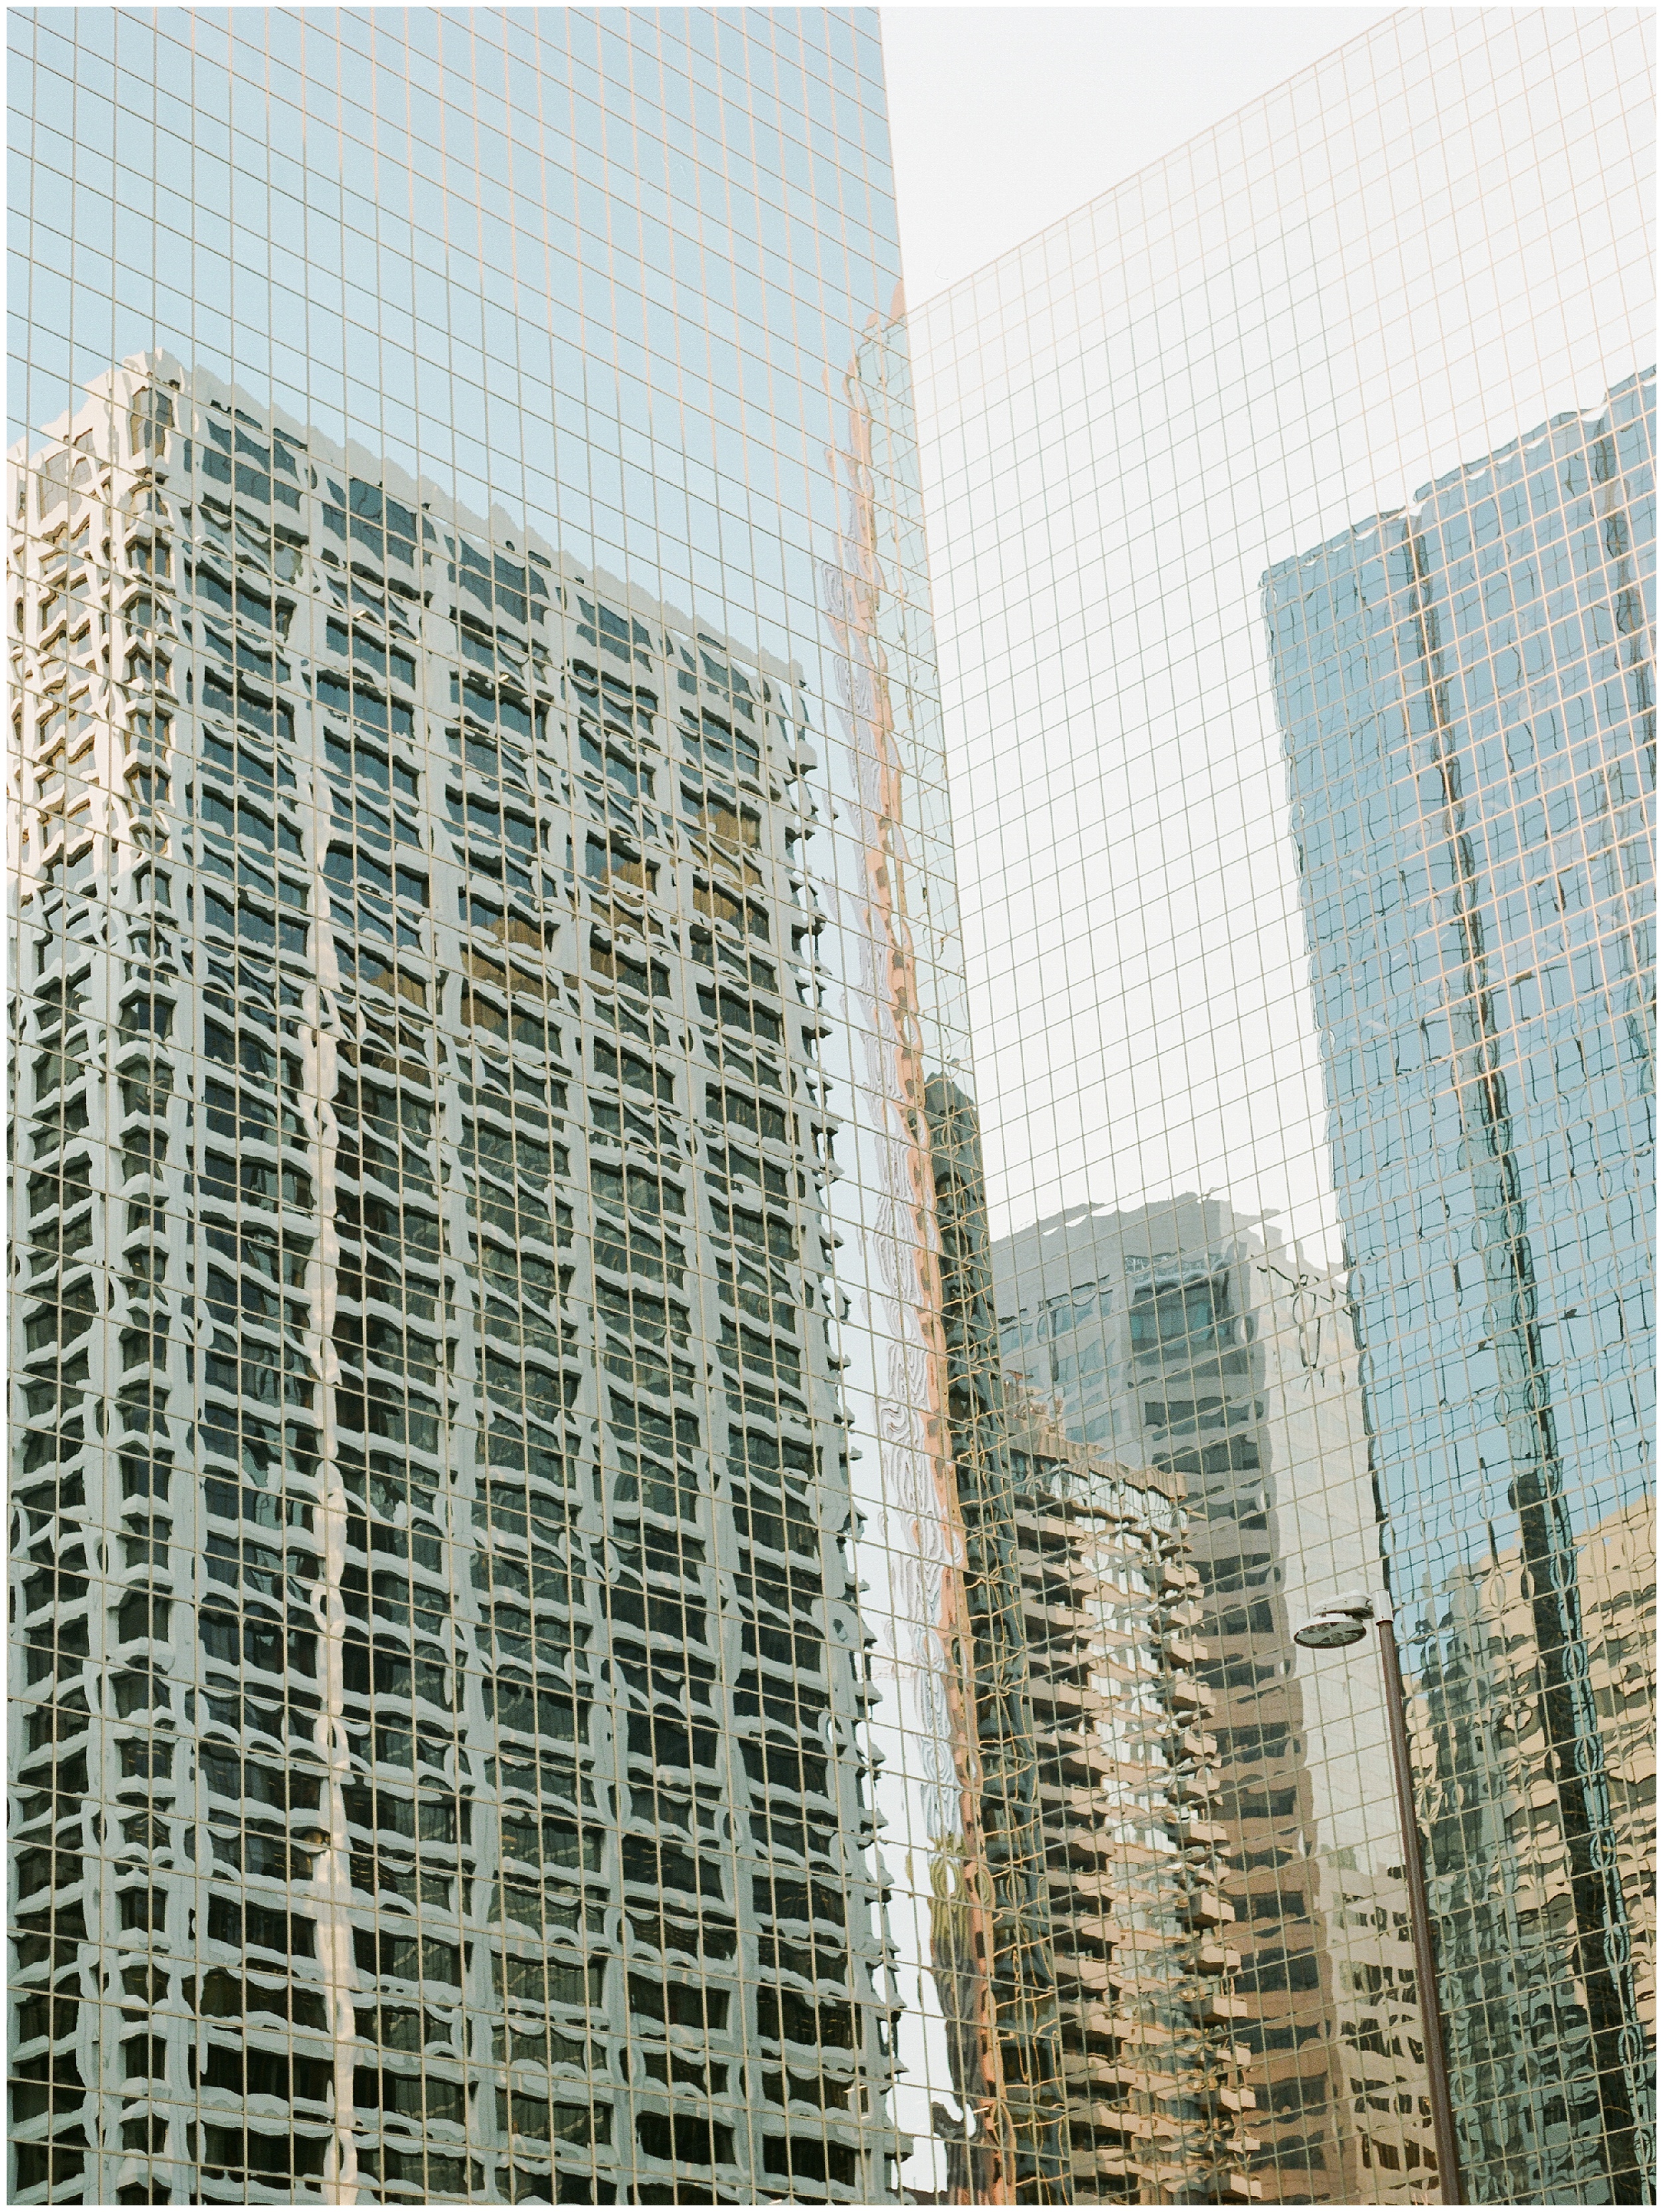 reflection of skyscrapers in glass in Calgary Alberta